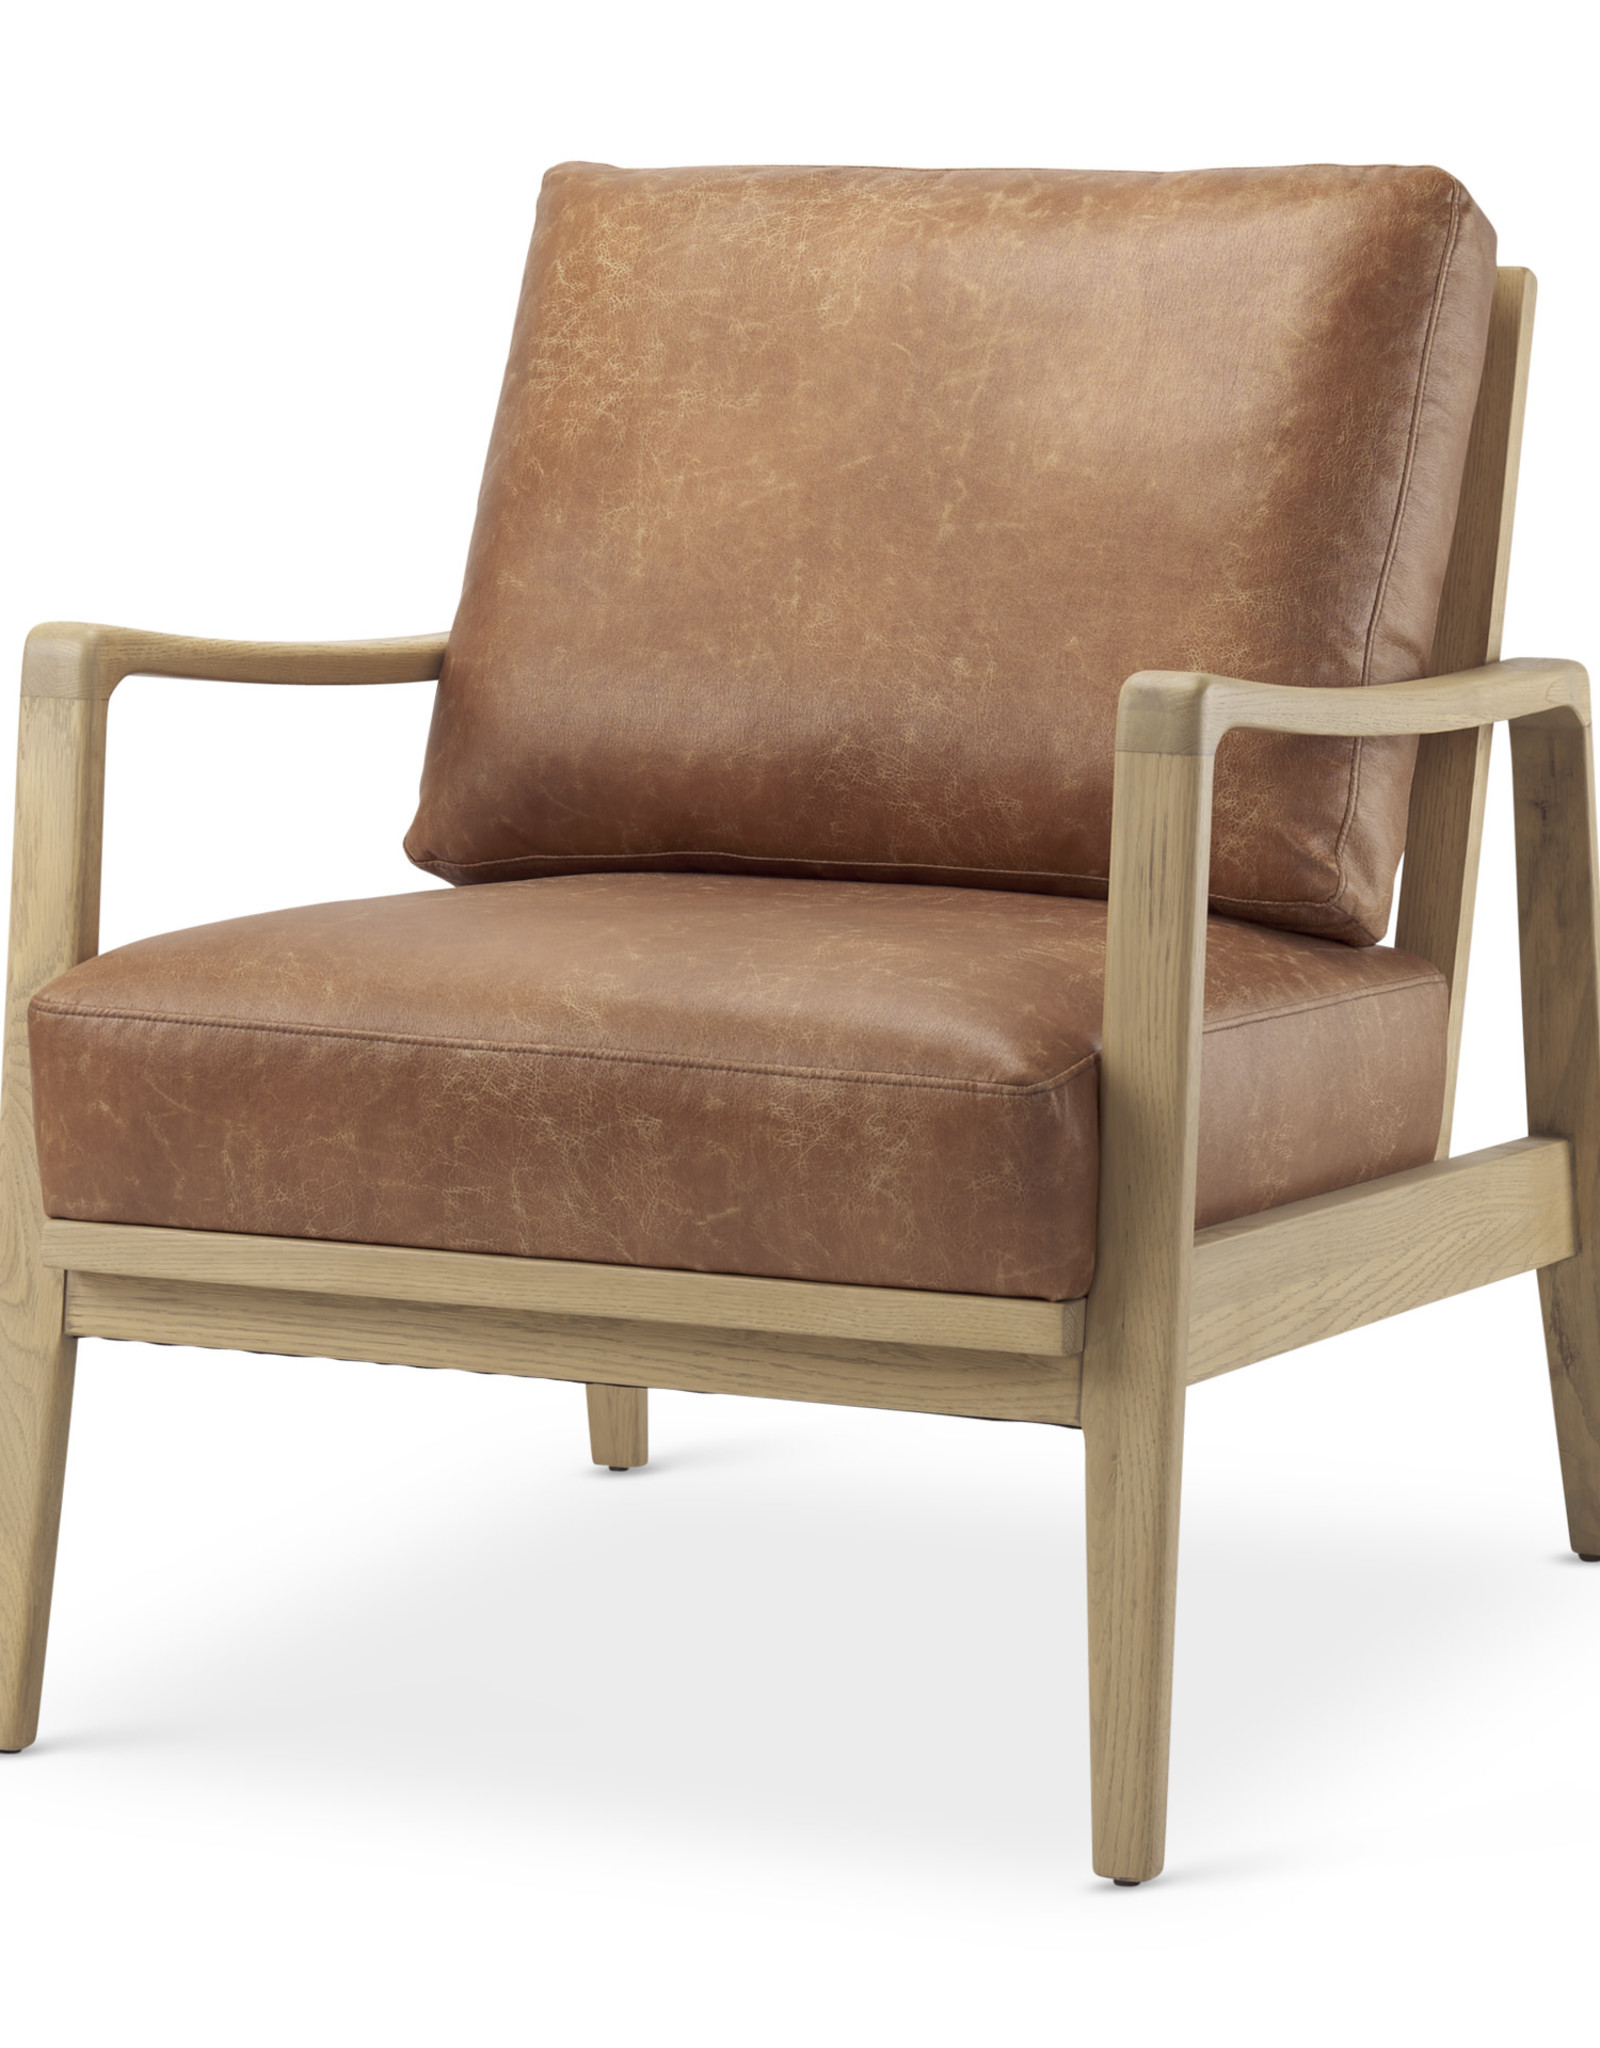 Raeleigh Tan Faux Leather Accent Chair